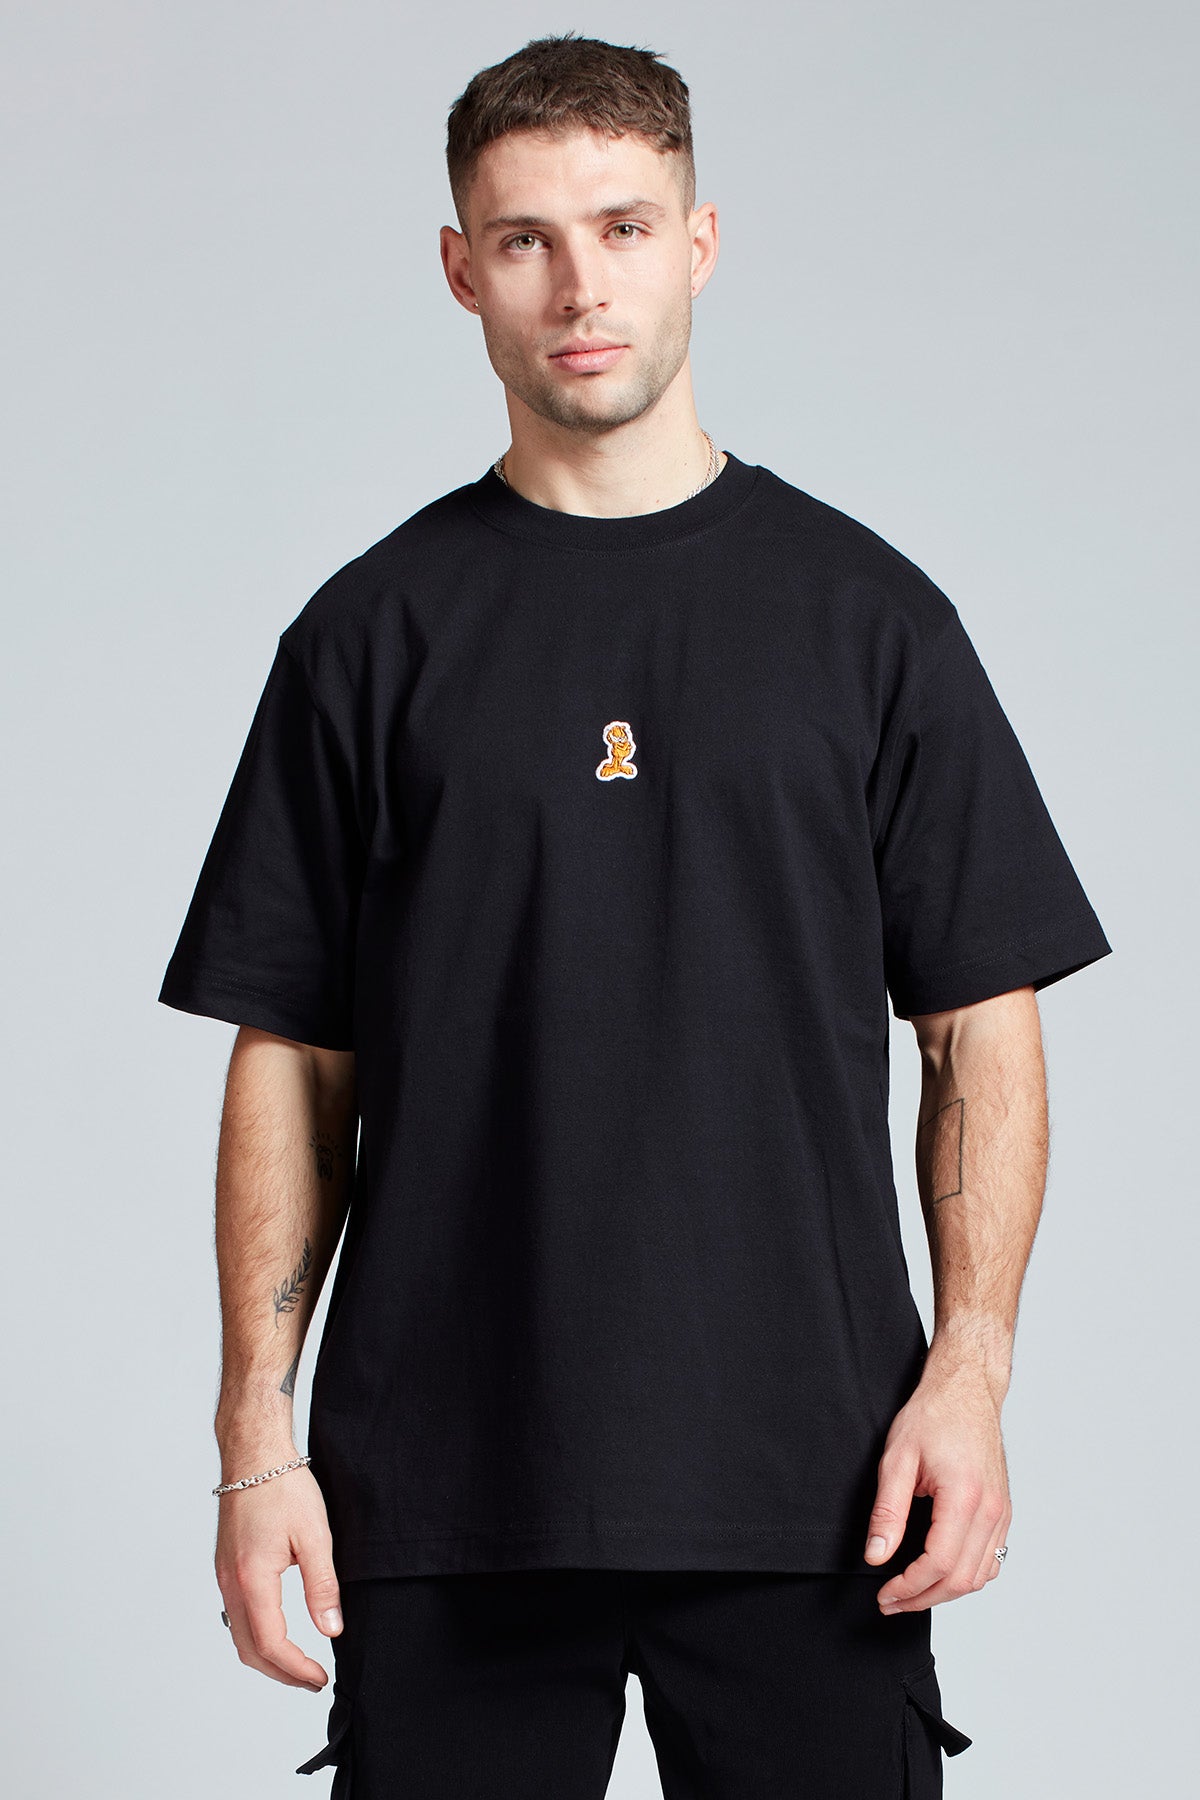 Garfield Moods T-shirt in Black